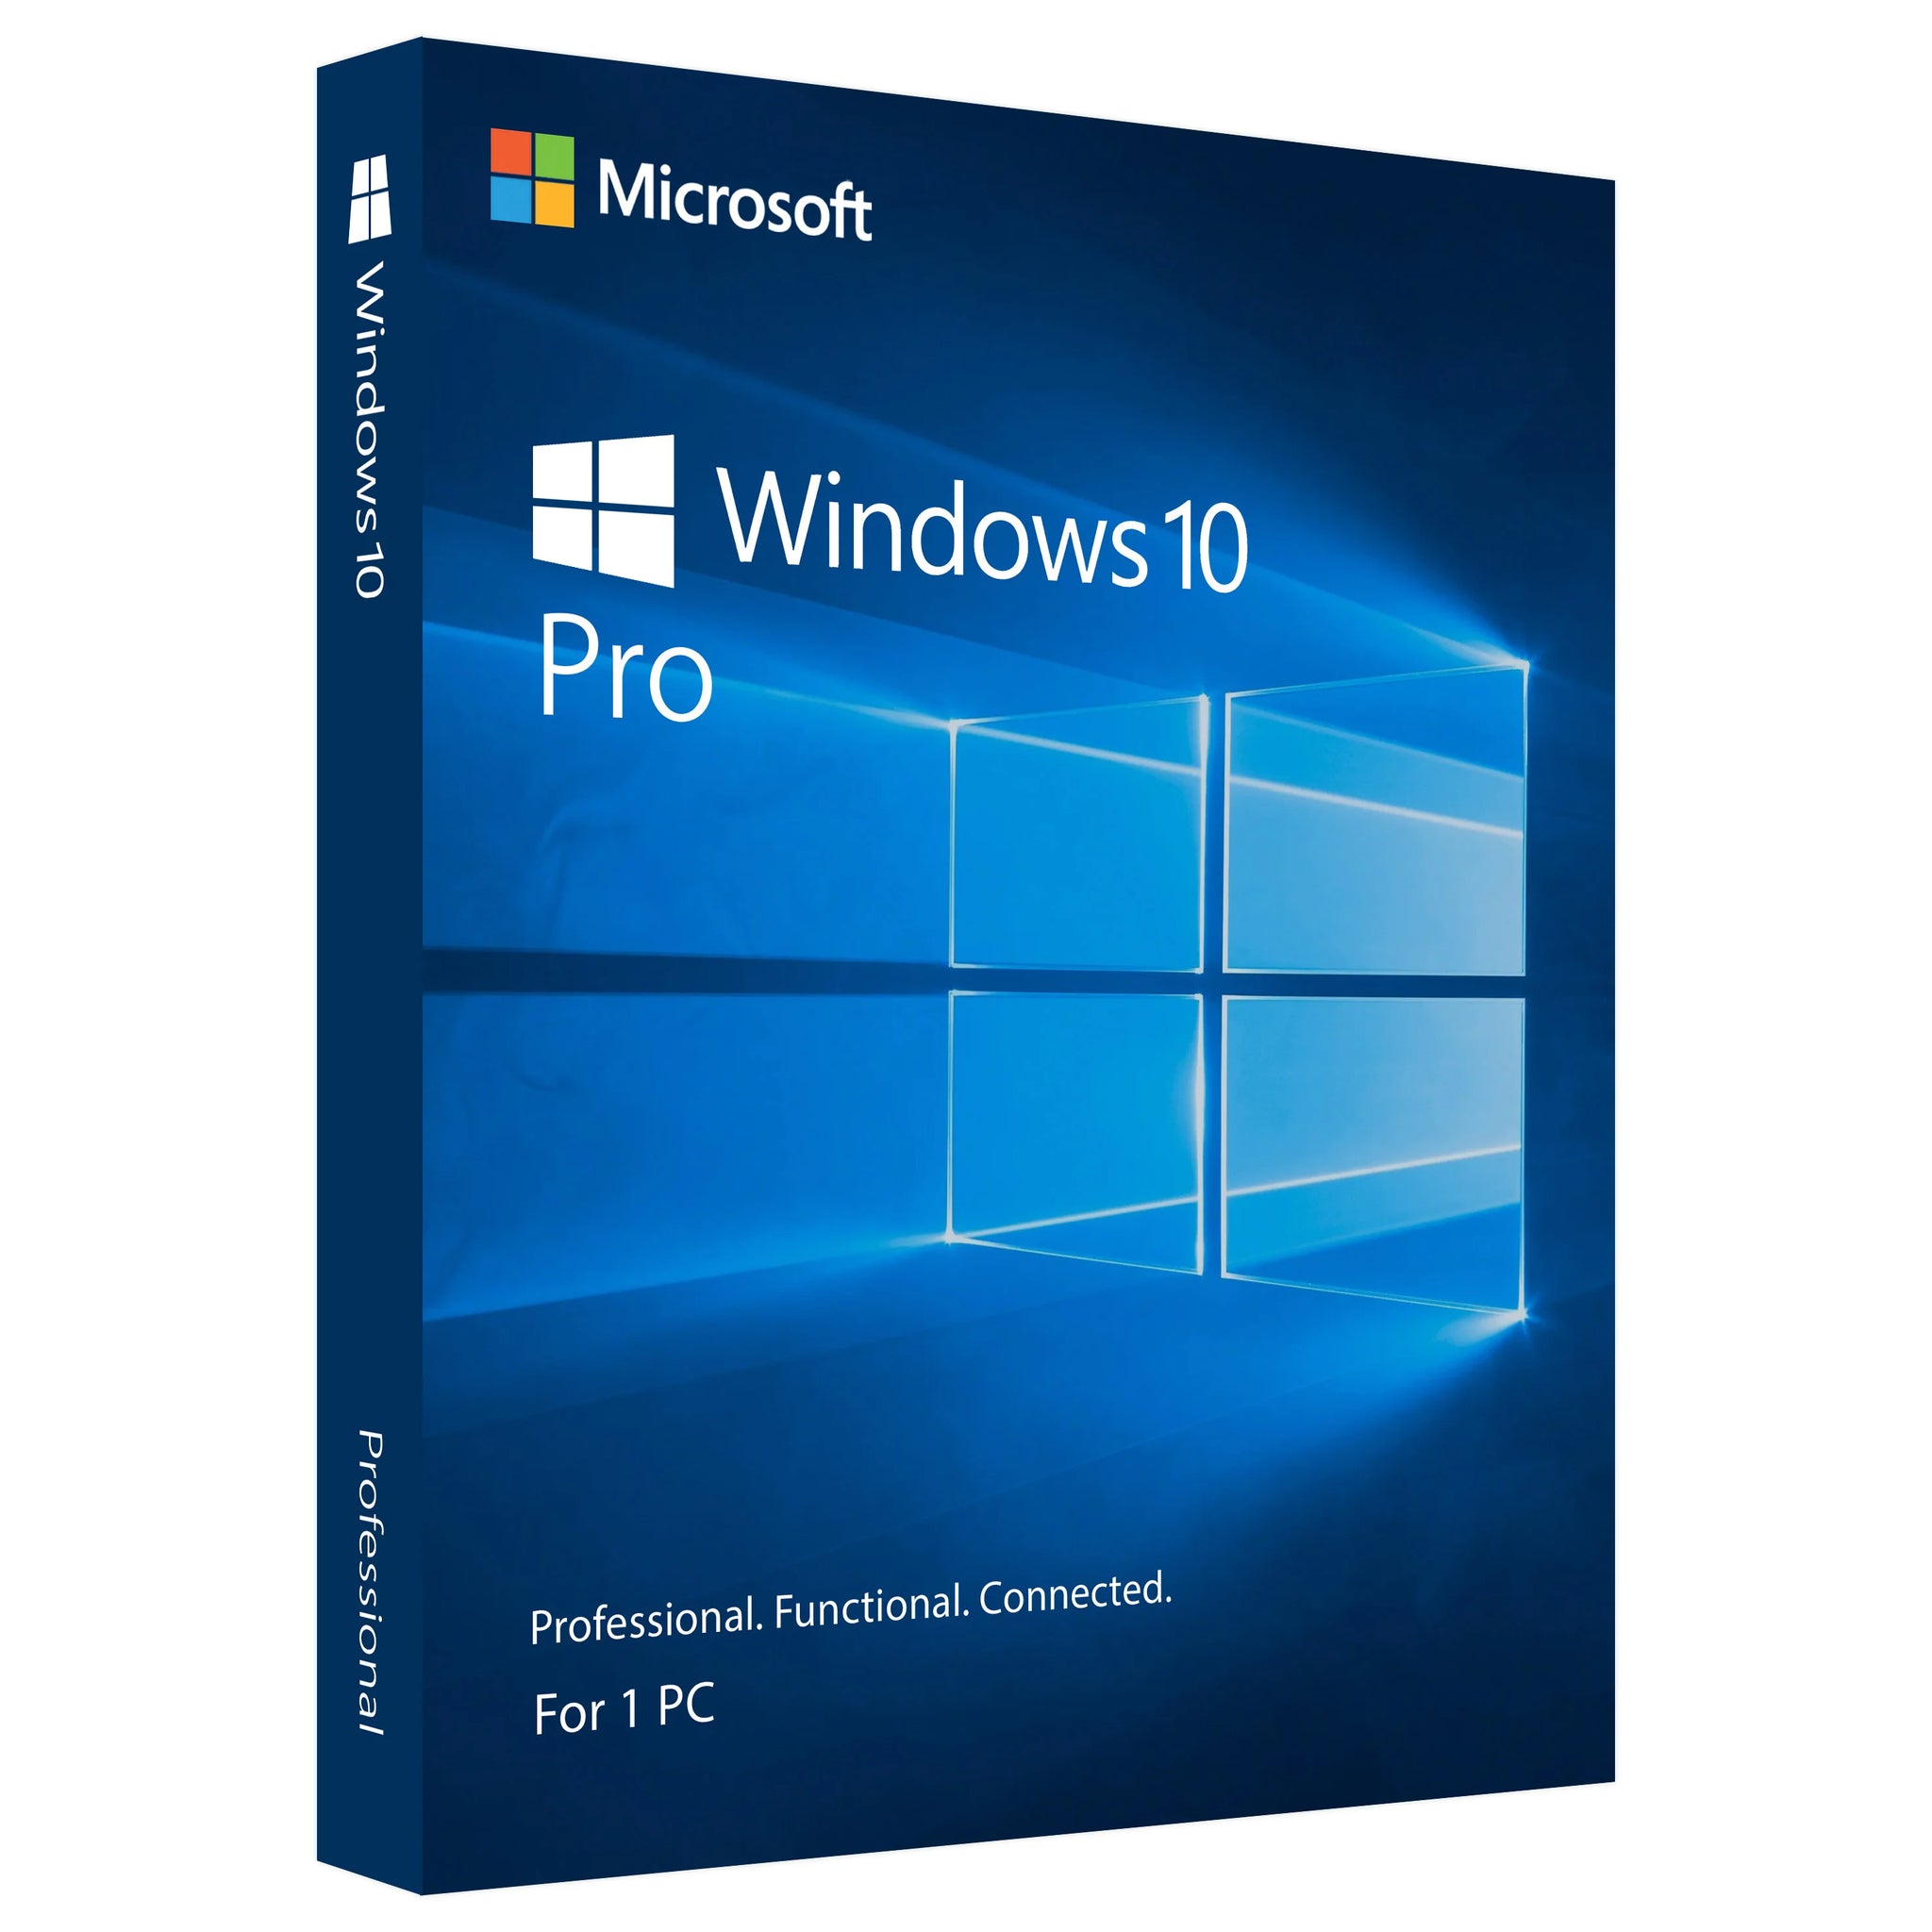 Microsoft Windows 10 Professional - Lifetime License Key for 1 PC